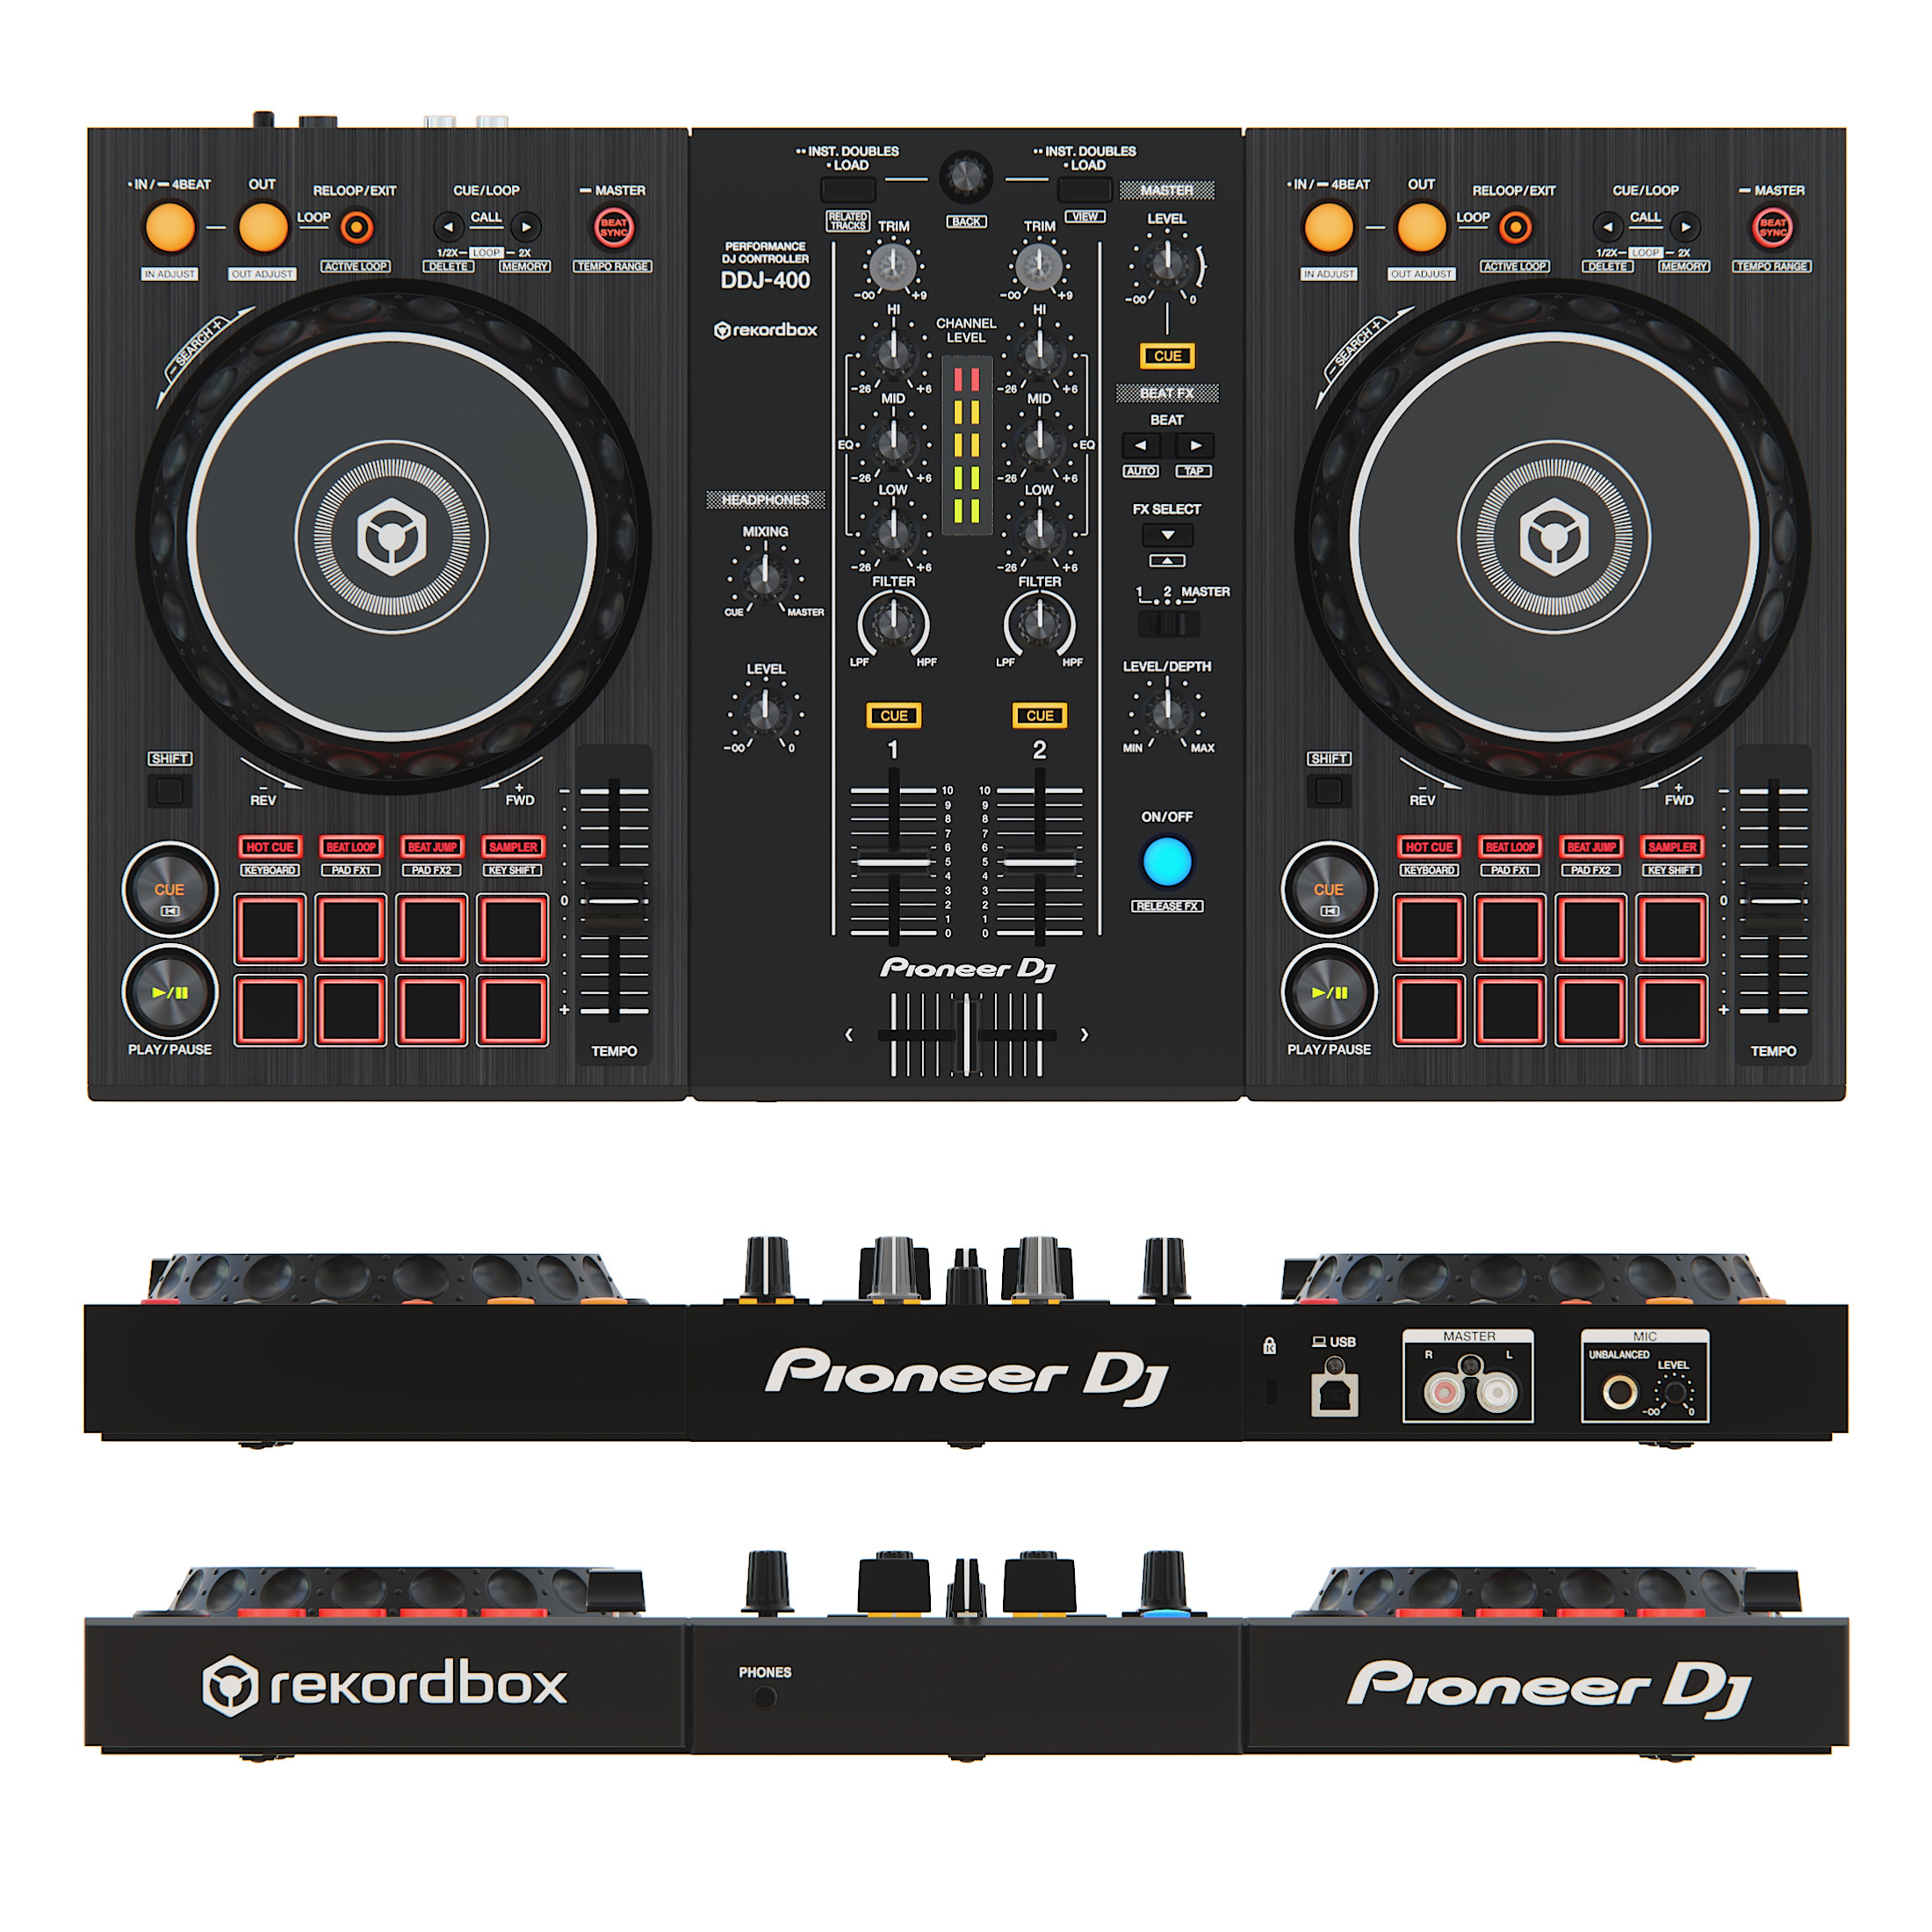 Pioneer ddj 400 размеры. Pioneer DDJ-400. Pioneer DJ 400 контроллер. DJ пульт Pioneer DDJ-400. Пульт DJ Pioneer 400.